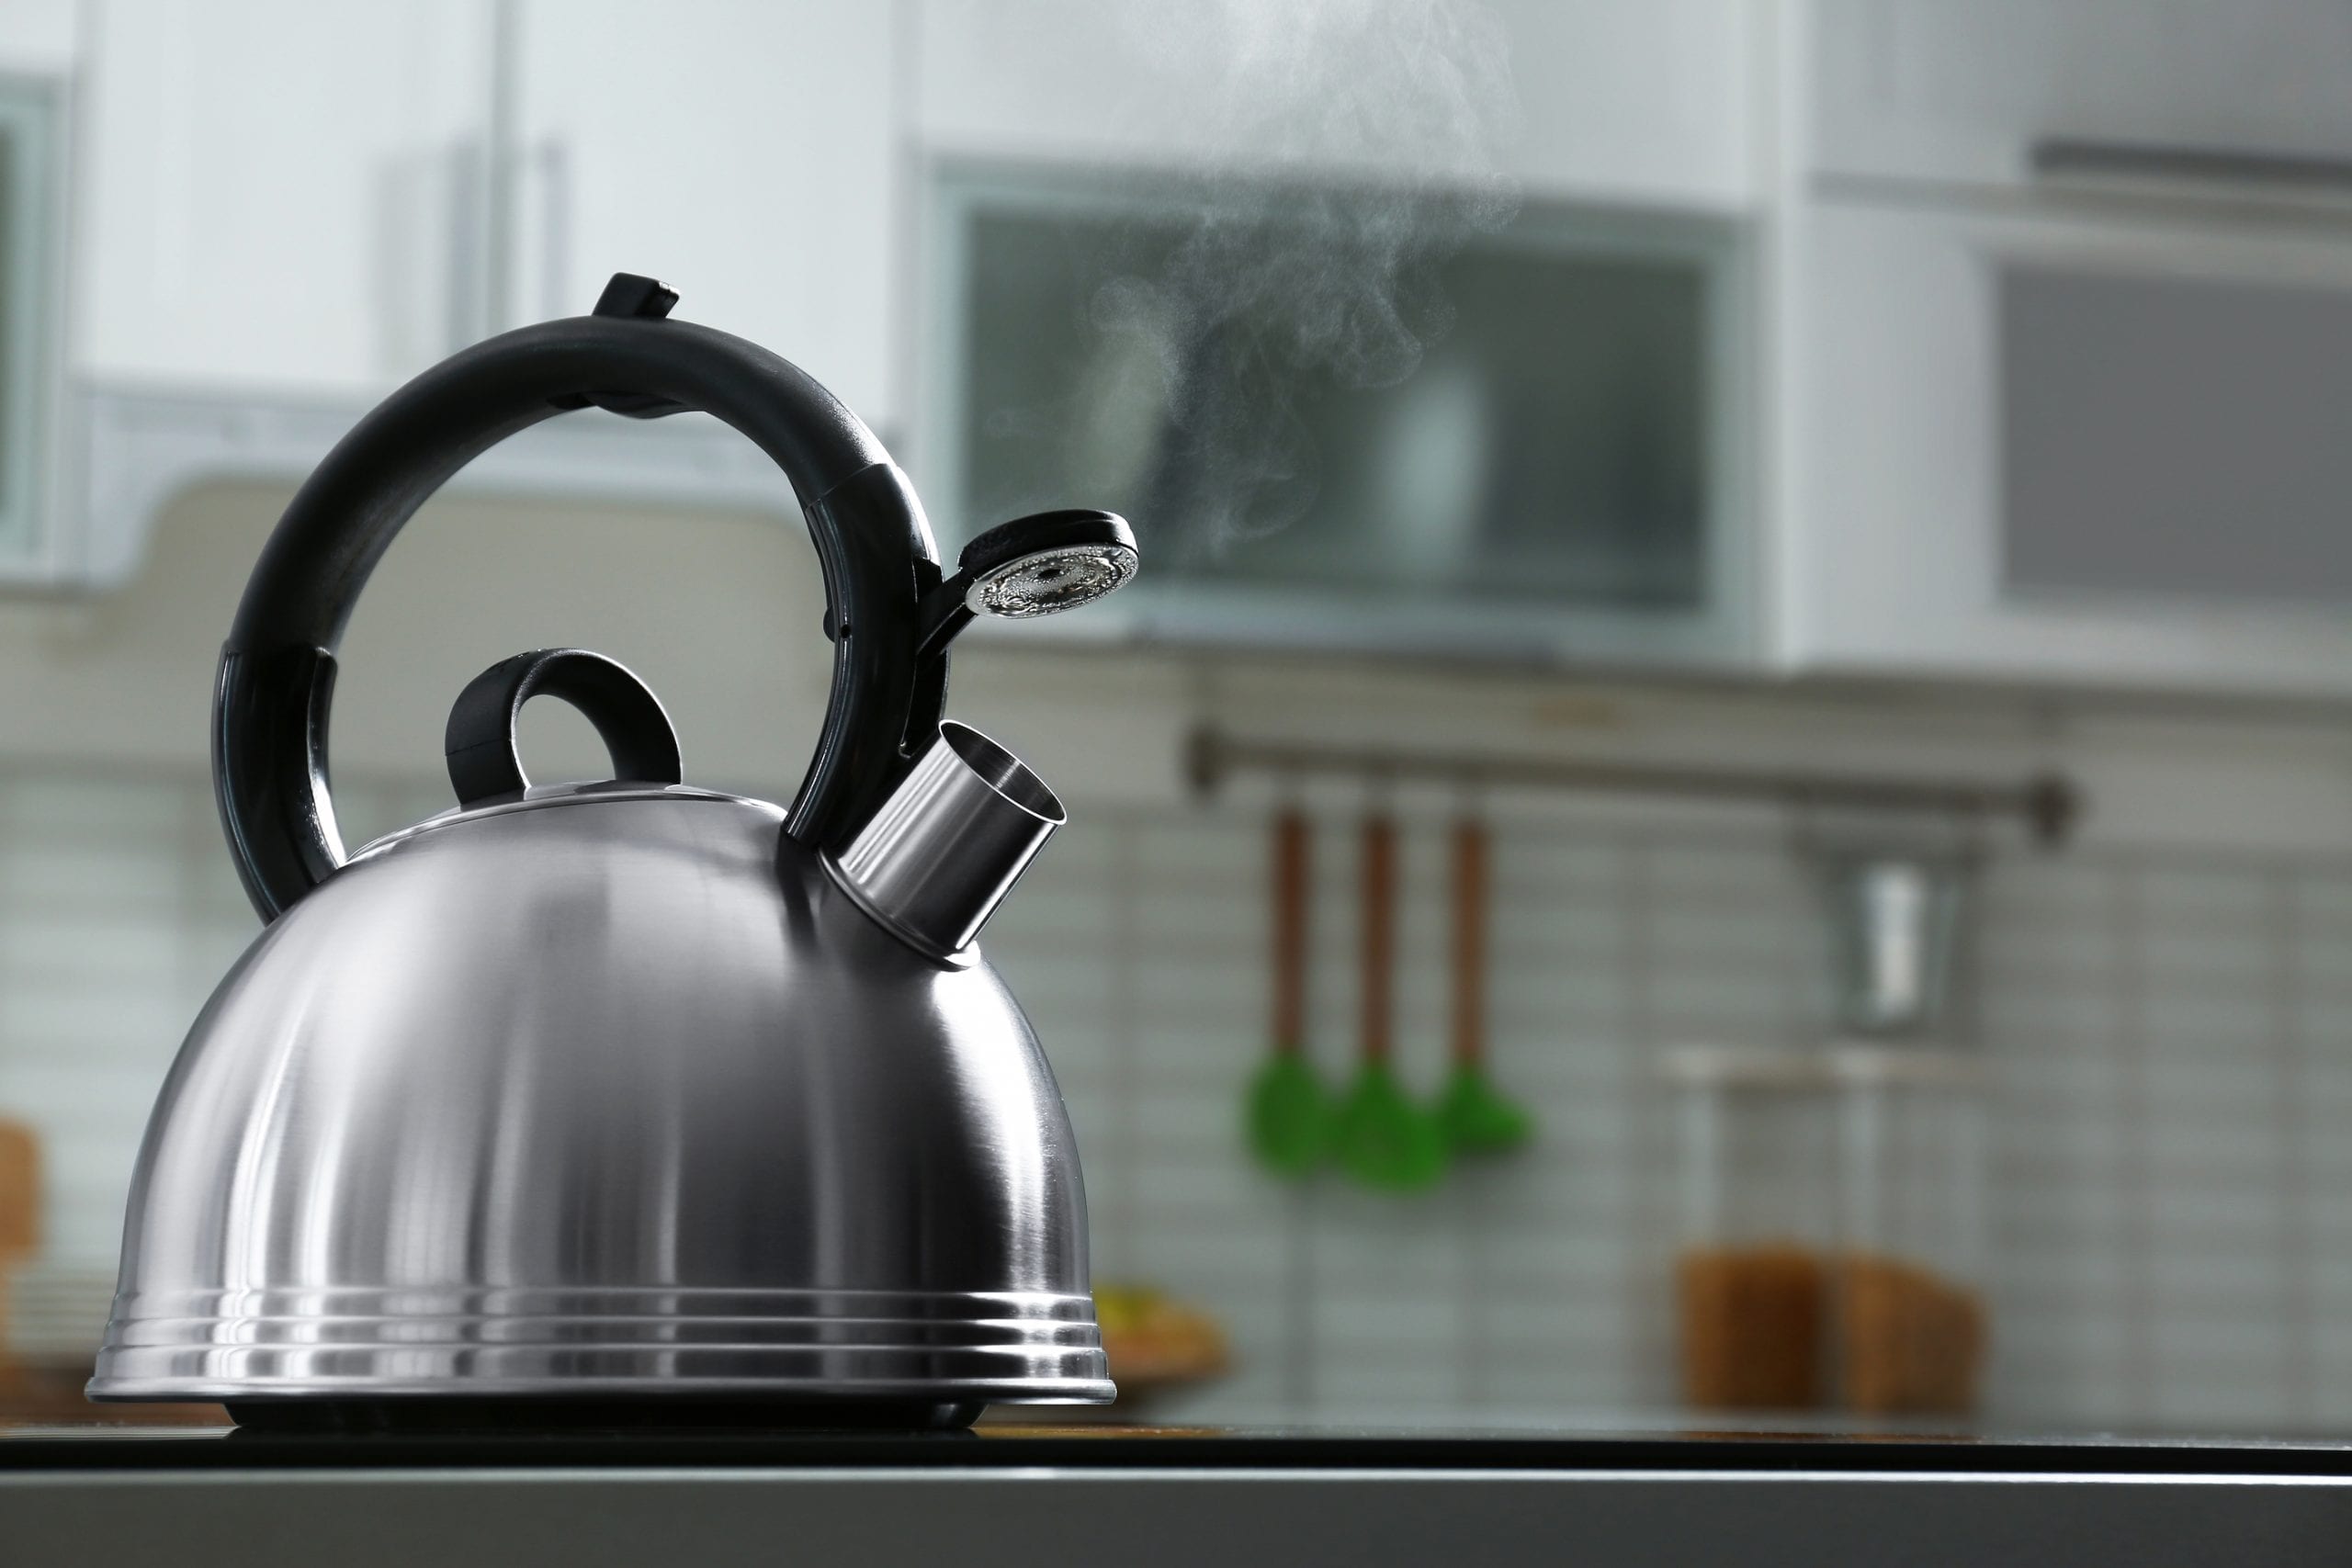 Severe Burn Injuries Lead to Recall of Lenox Teapots